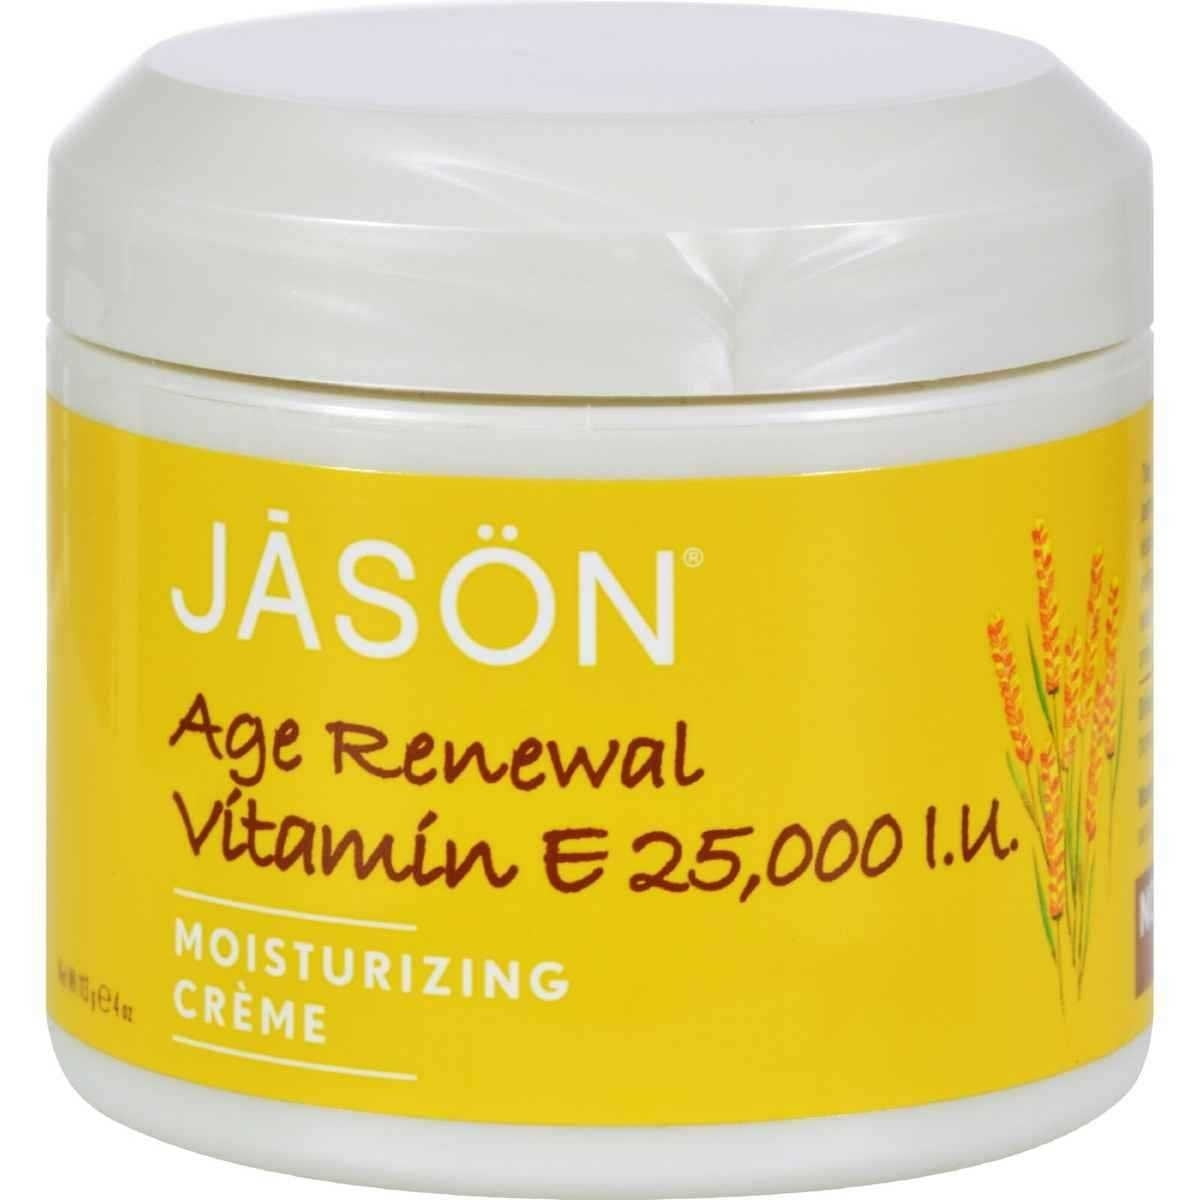 Age Renewal Vitamin Creme 25,000 IU Jason Natural Cosmetics 4 oz Cream - Walmart.com